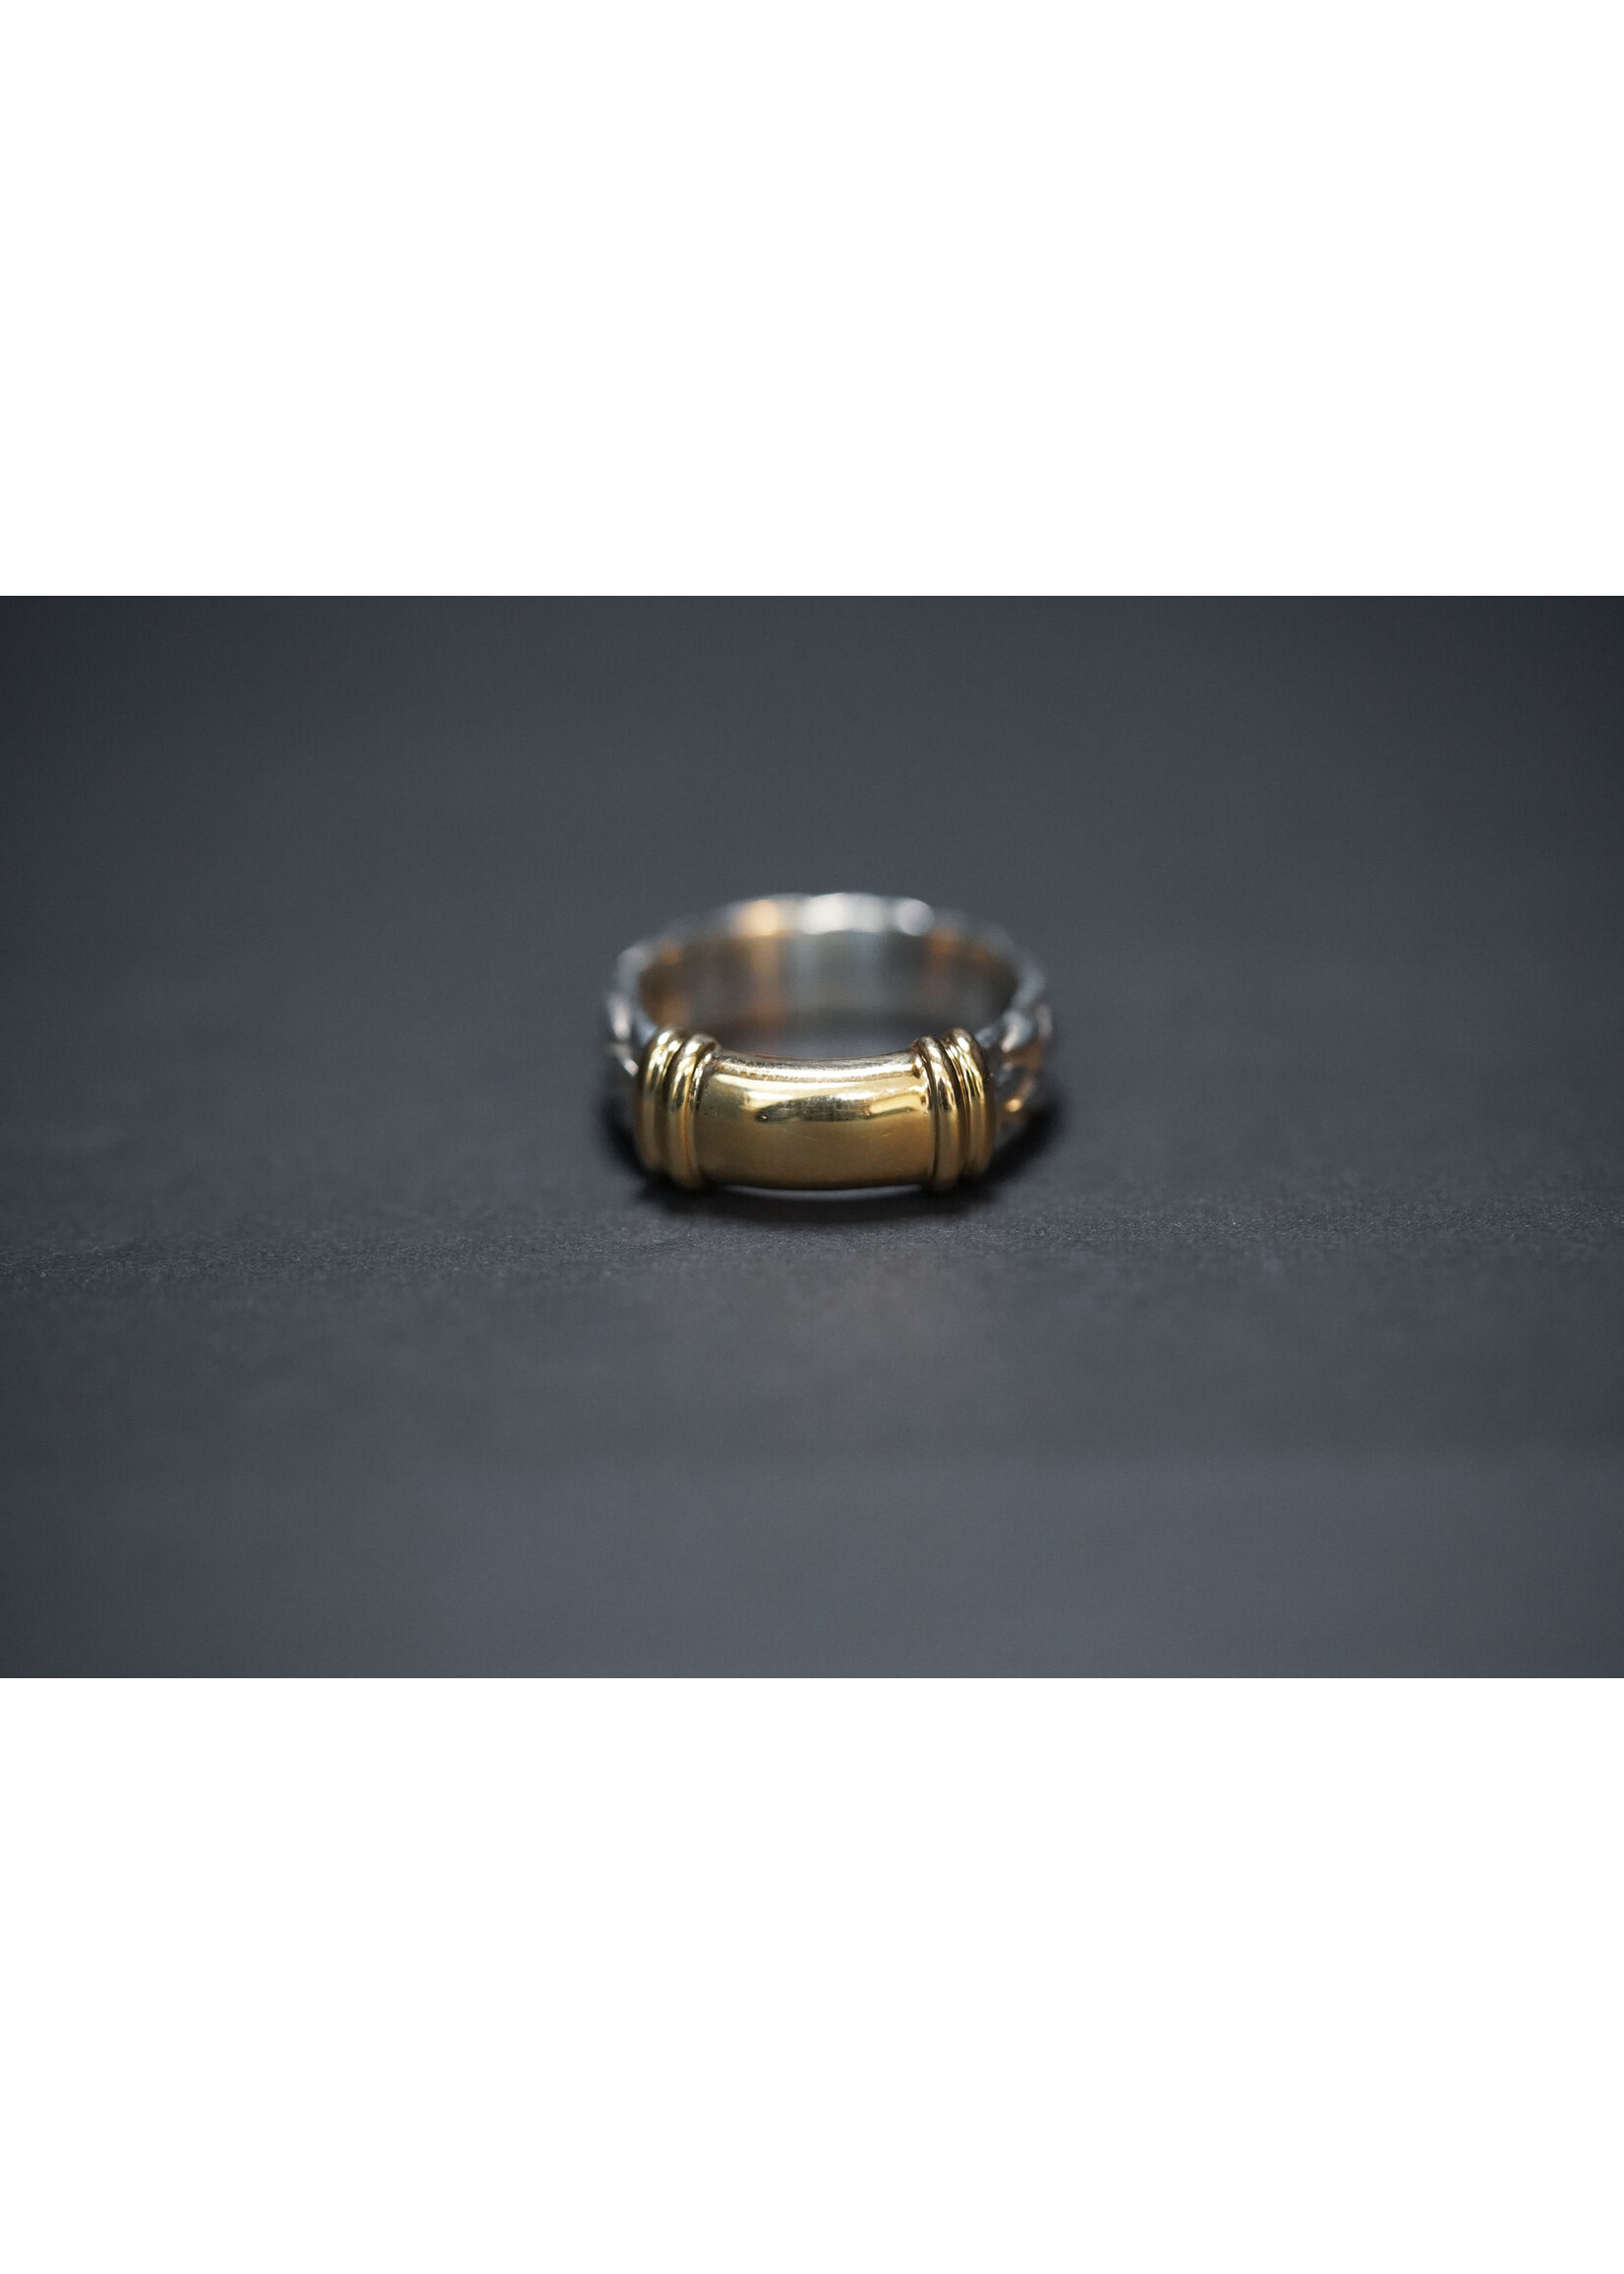 Sterling/18KY 8.86g David Yurman Fashion Ring (size 9)